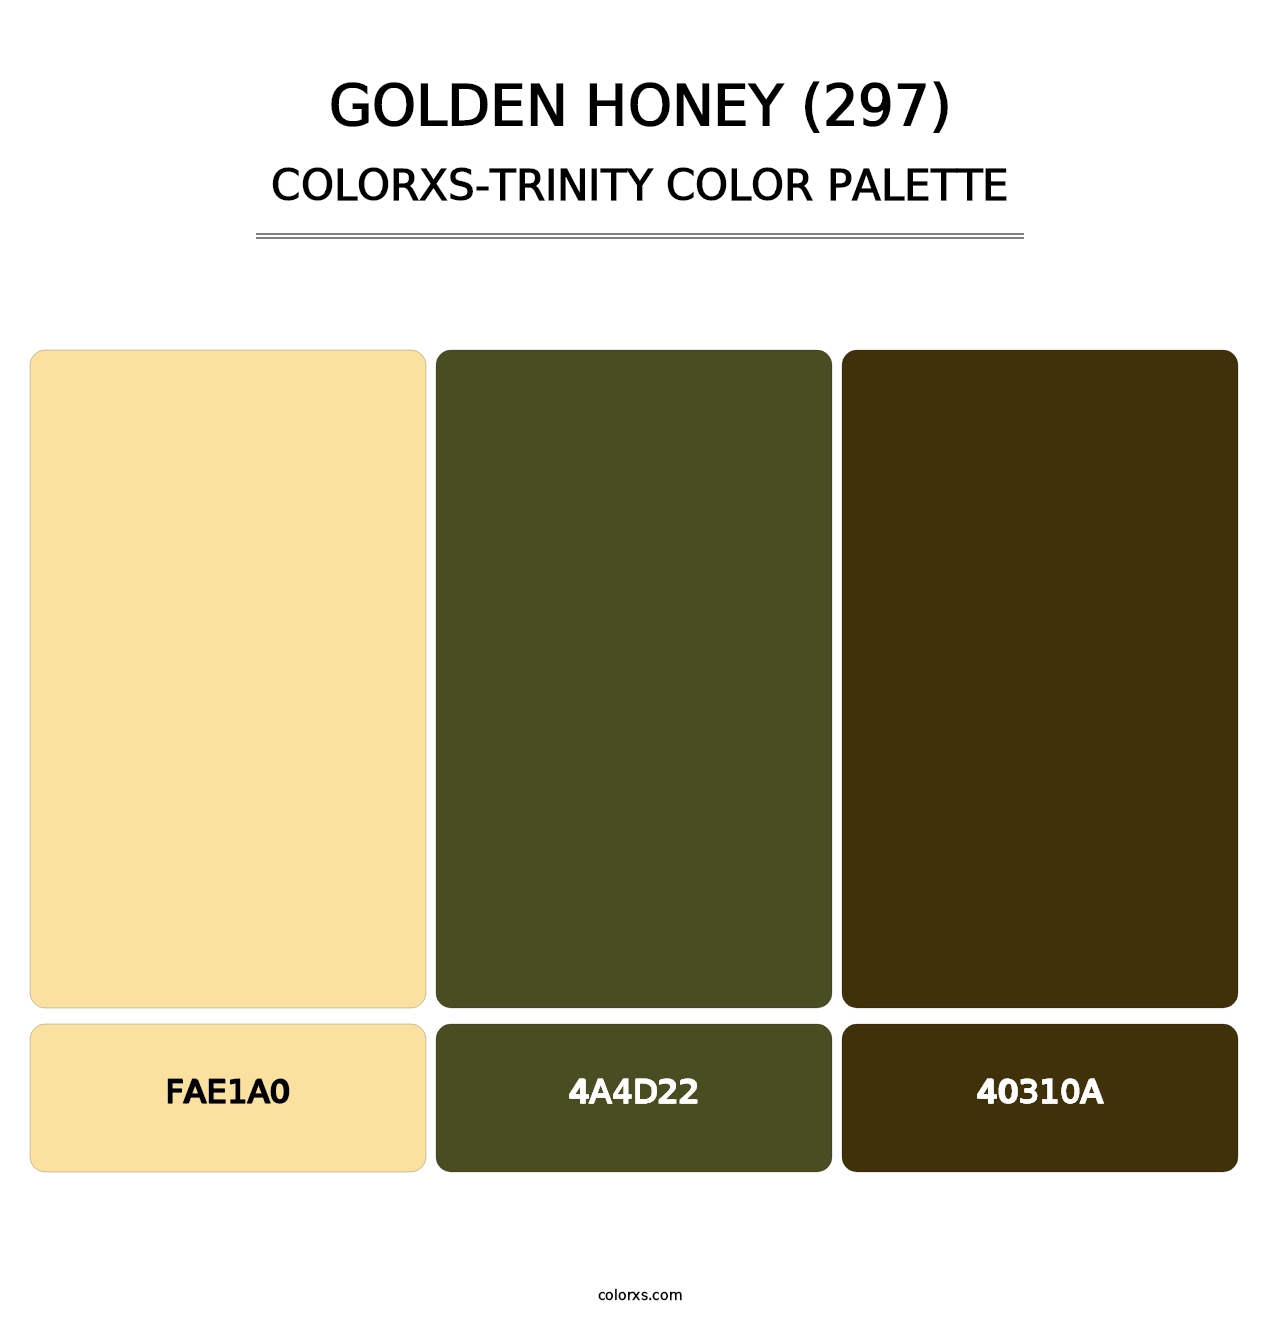 Golden Honey (297) - Colorxs Trinity Palette